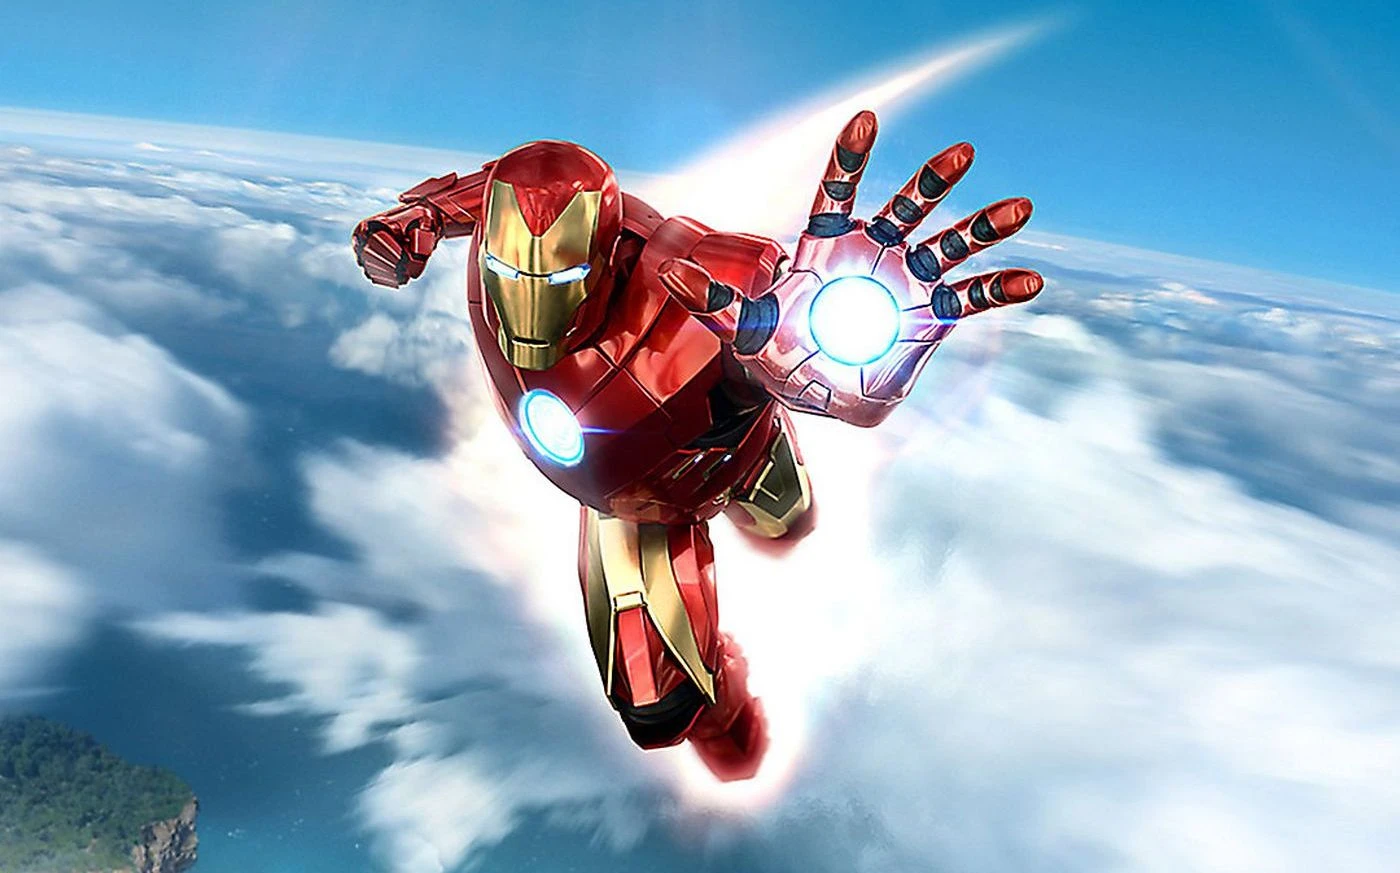 Marvel's Iron Man VR